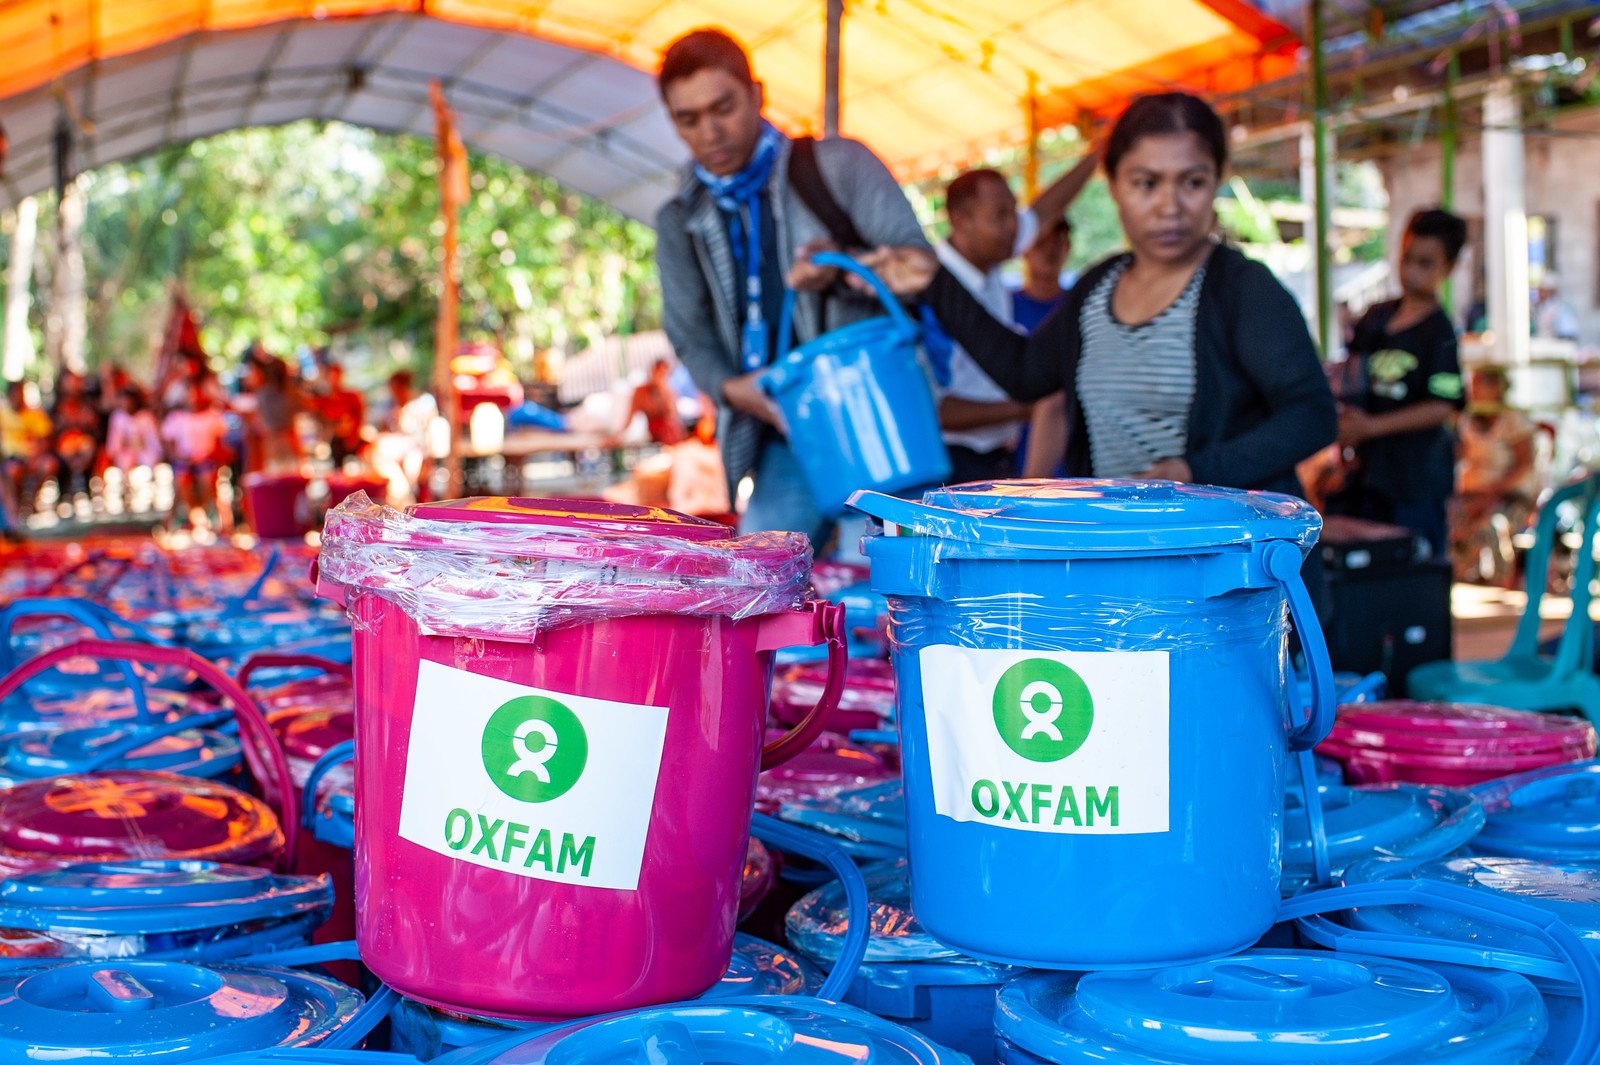 Oxfam's Immediate Response